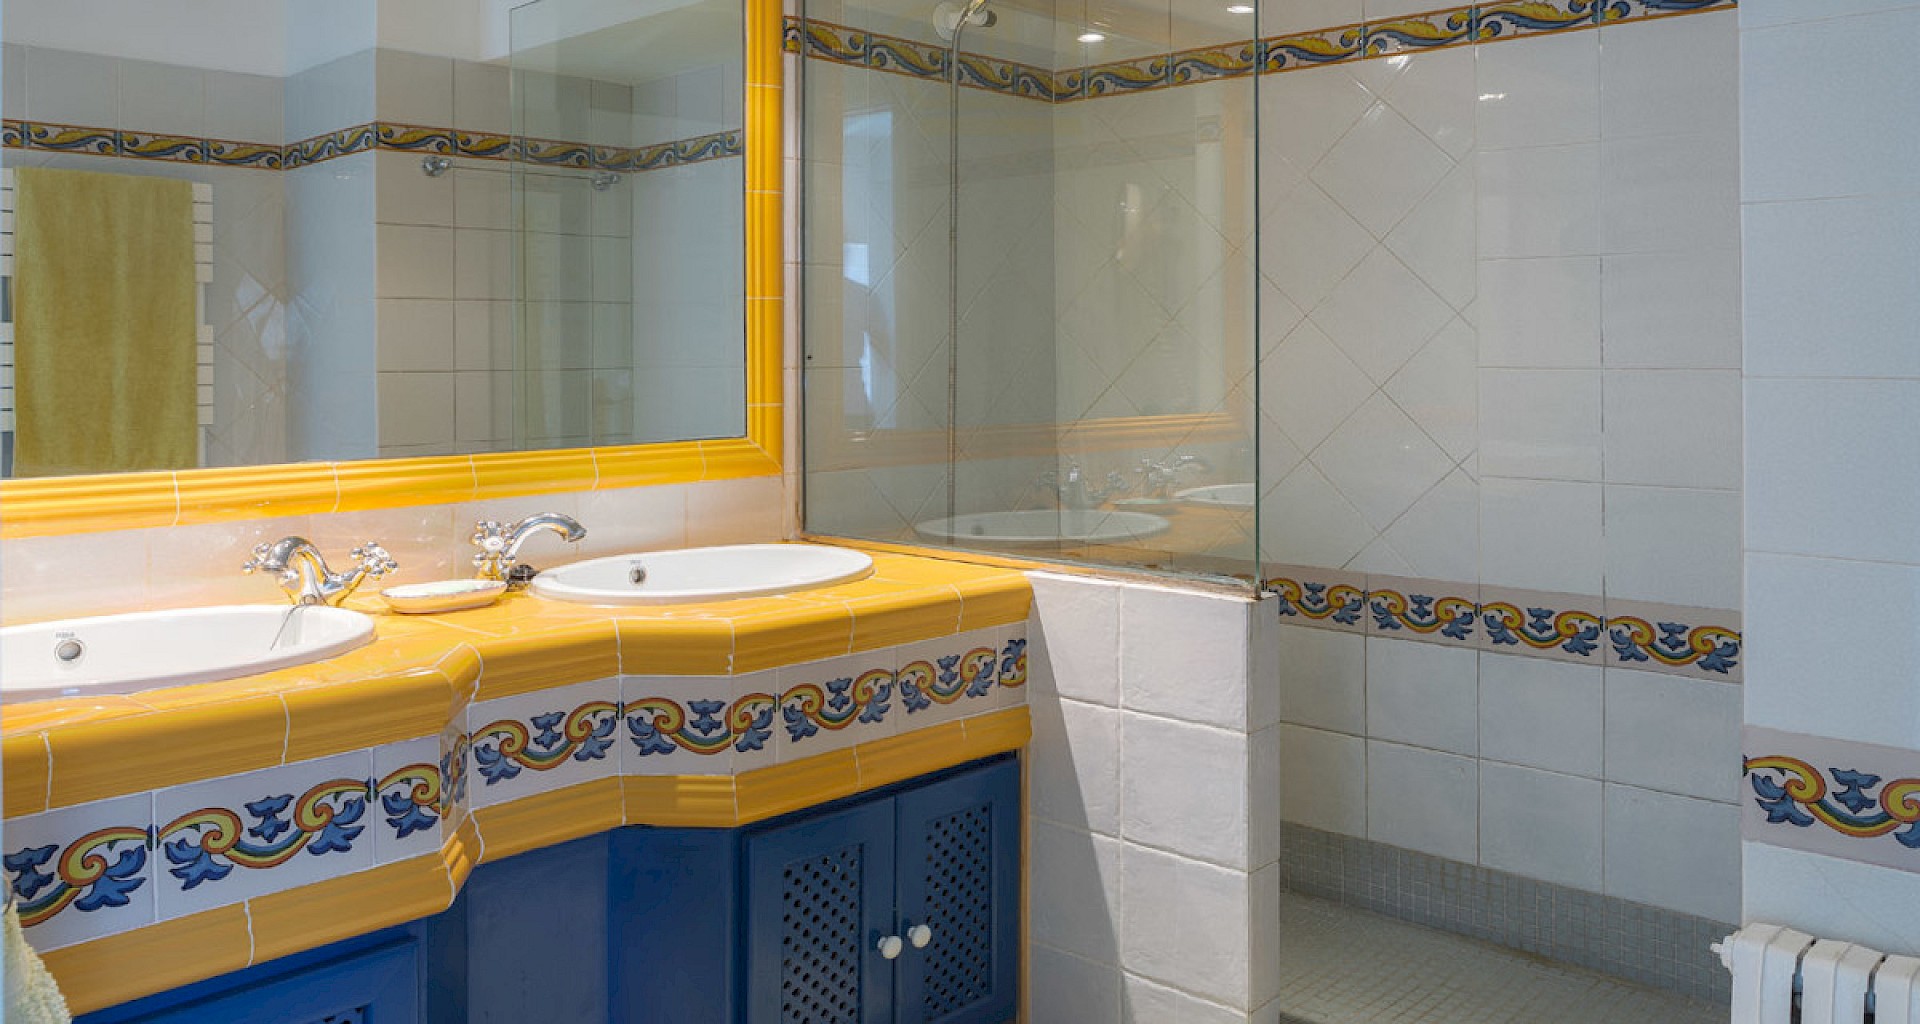 KROHN & LUEDEMANN Mediterranean Finca with guesthouse and panoramic views in Es Capdella 9 Bathroom - Finca Es Capdella